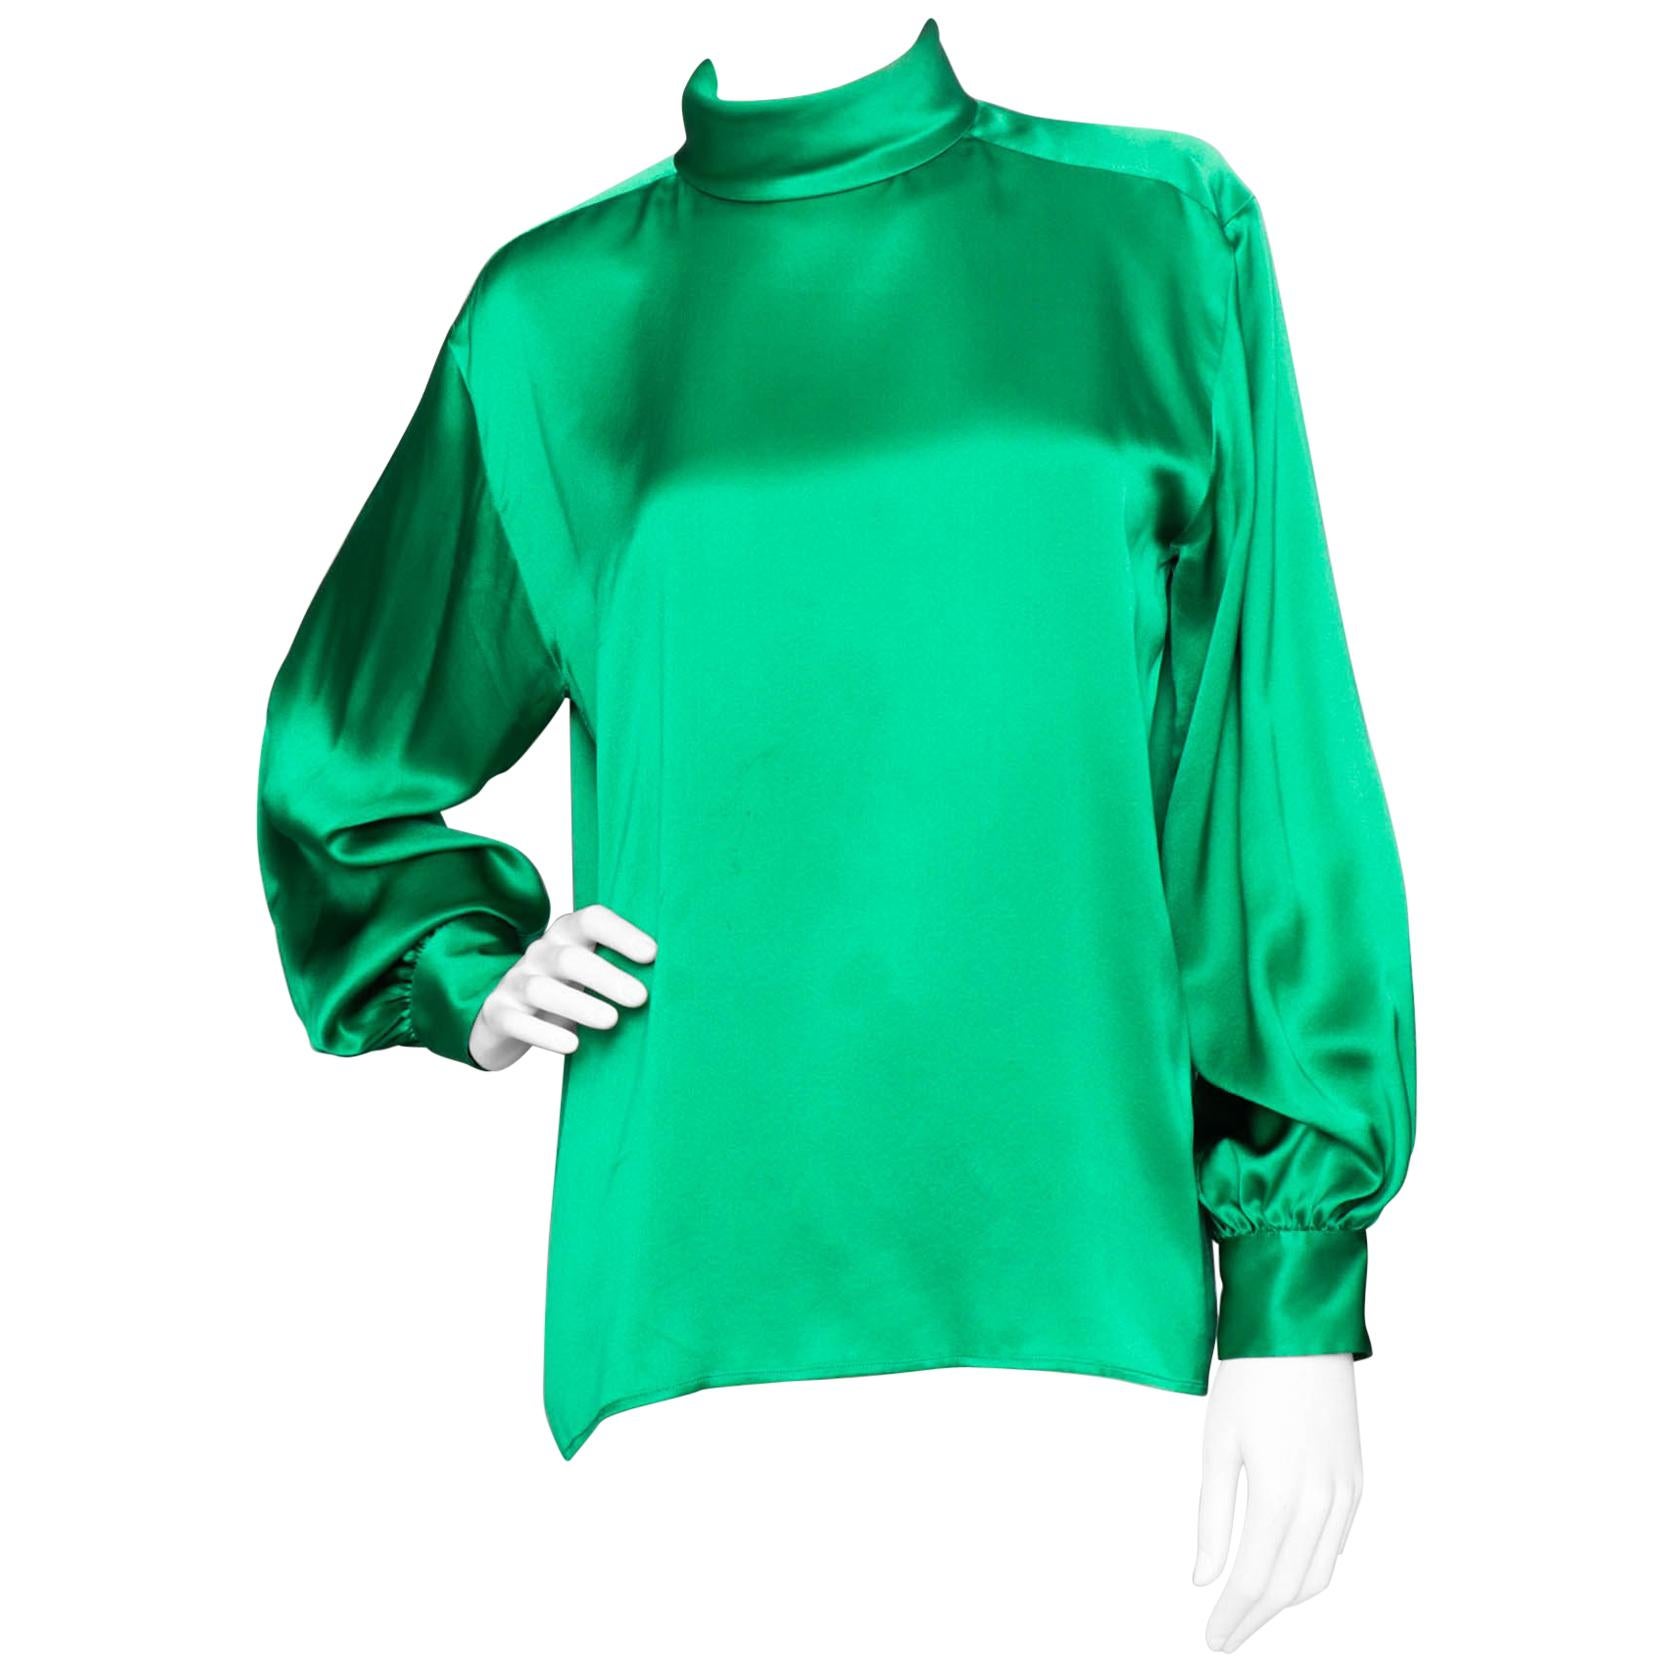 A 1980s Vintage Yves Saint Laurent Rive Gauche Green Silk Blouse